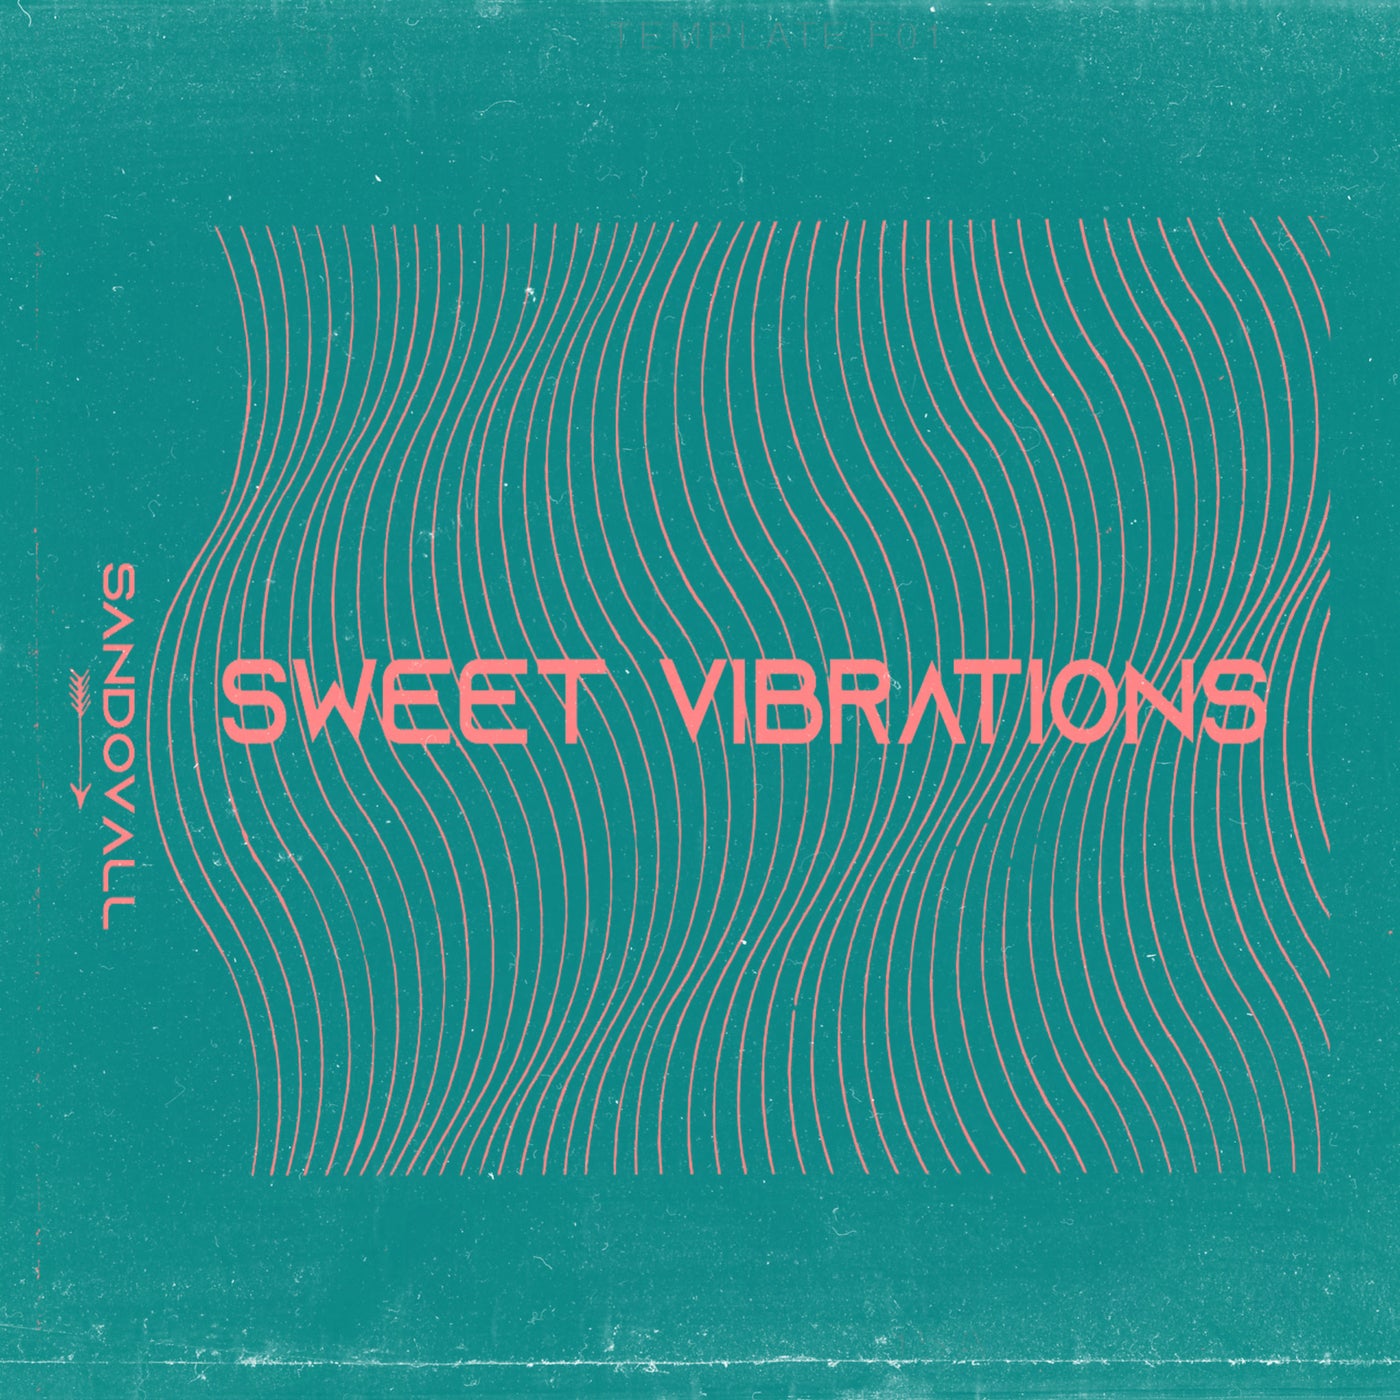 Sweet vibrations